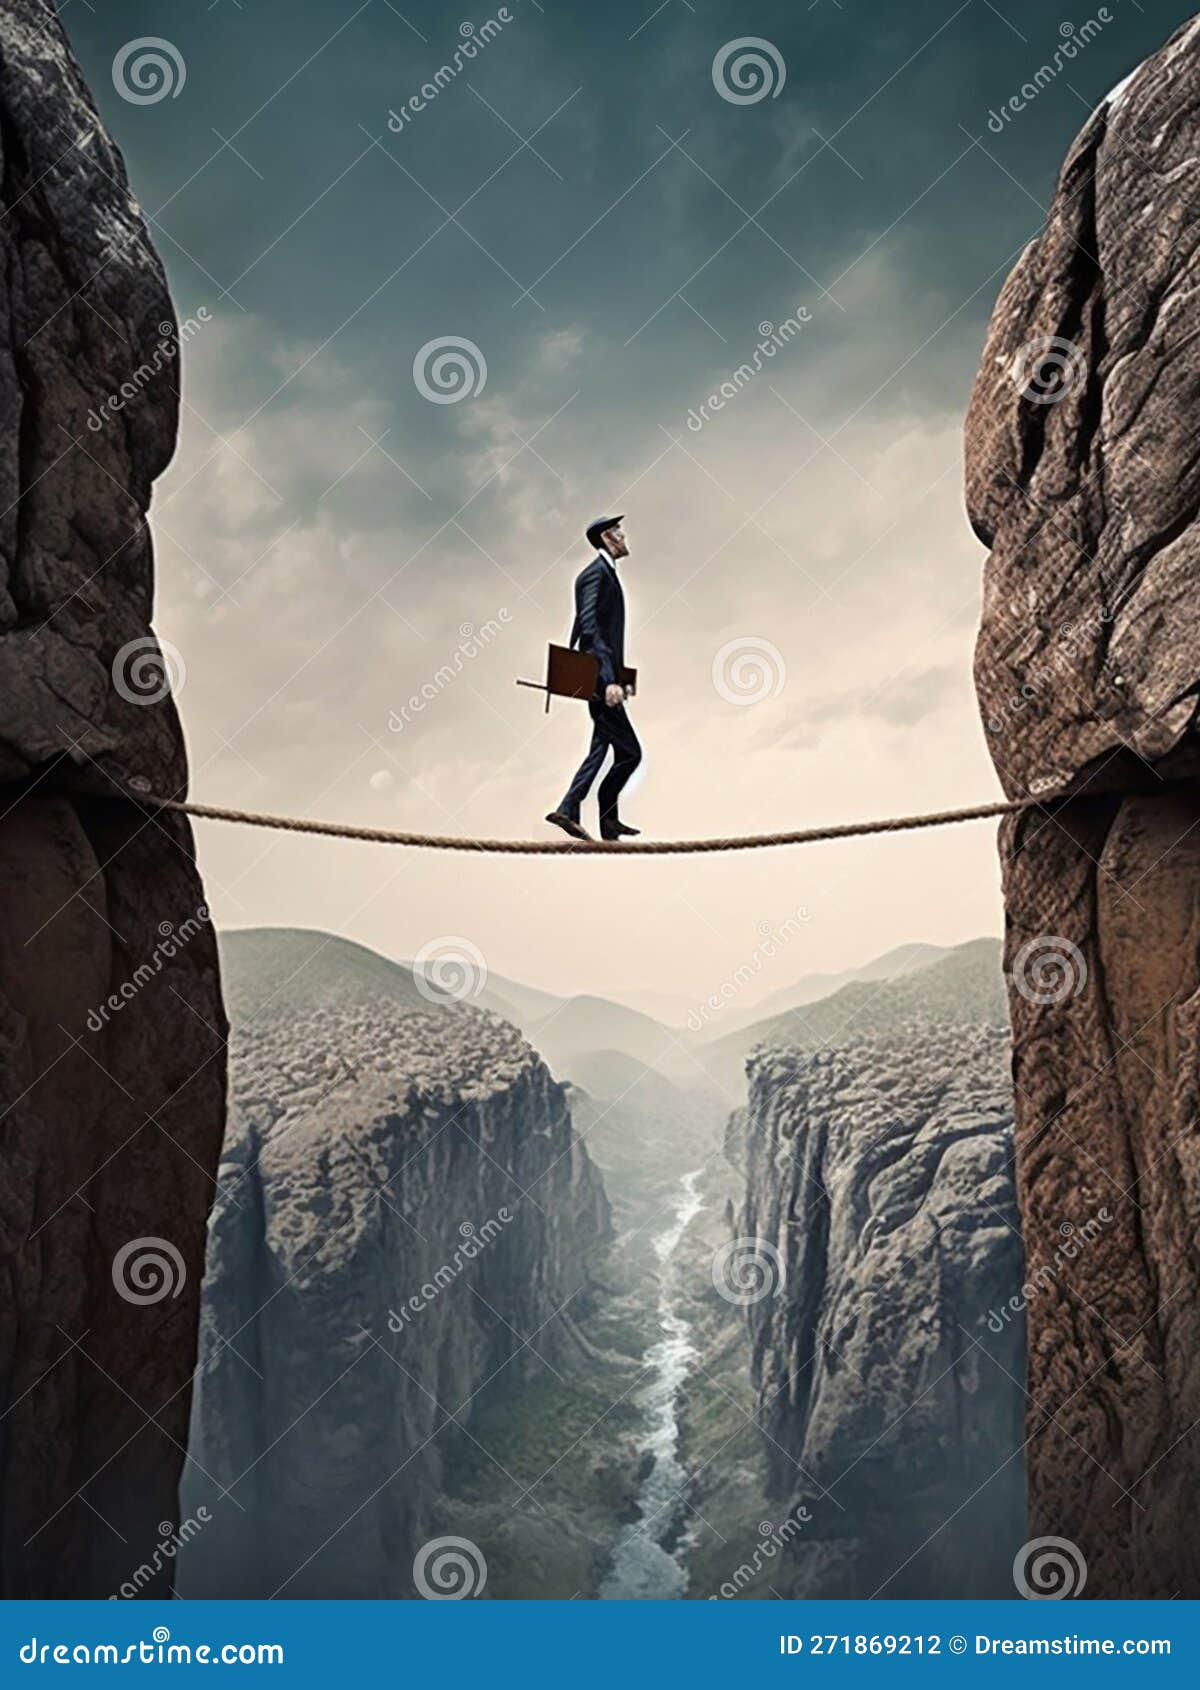 Businessman Walking on Tightrope between Rocks Stock Illustration